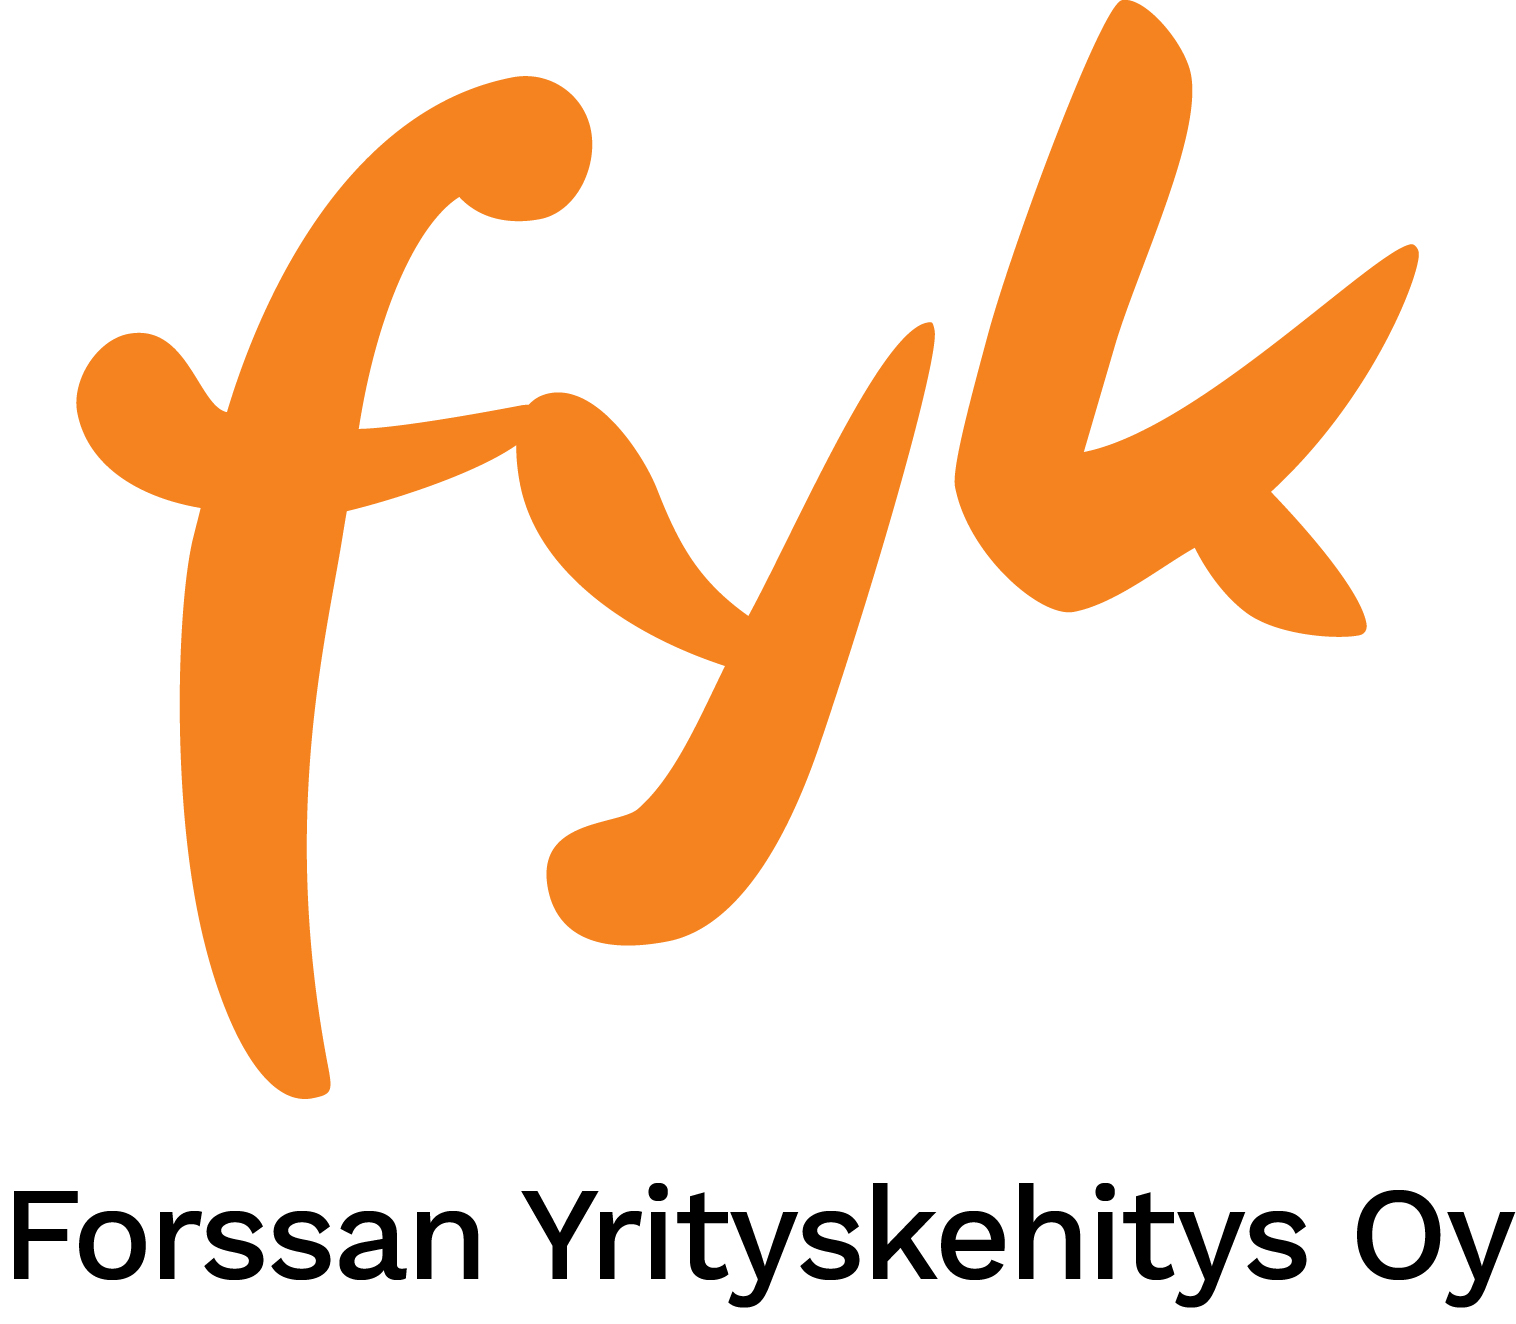 Forssan Yrityskehitys Oy:n logo